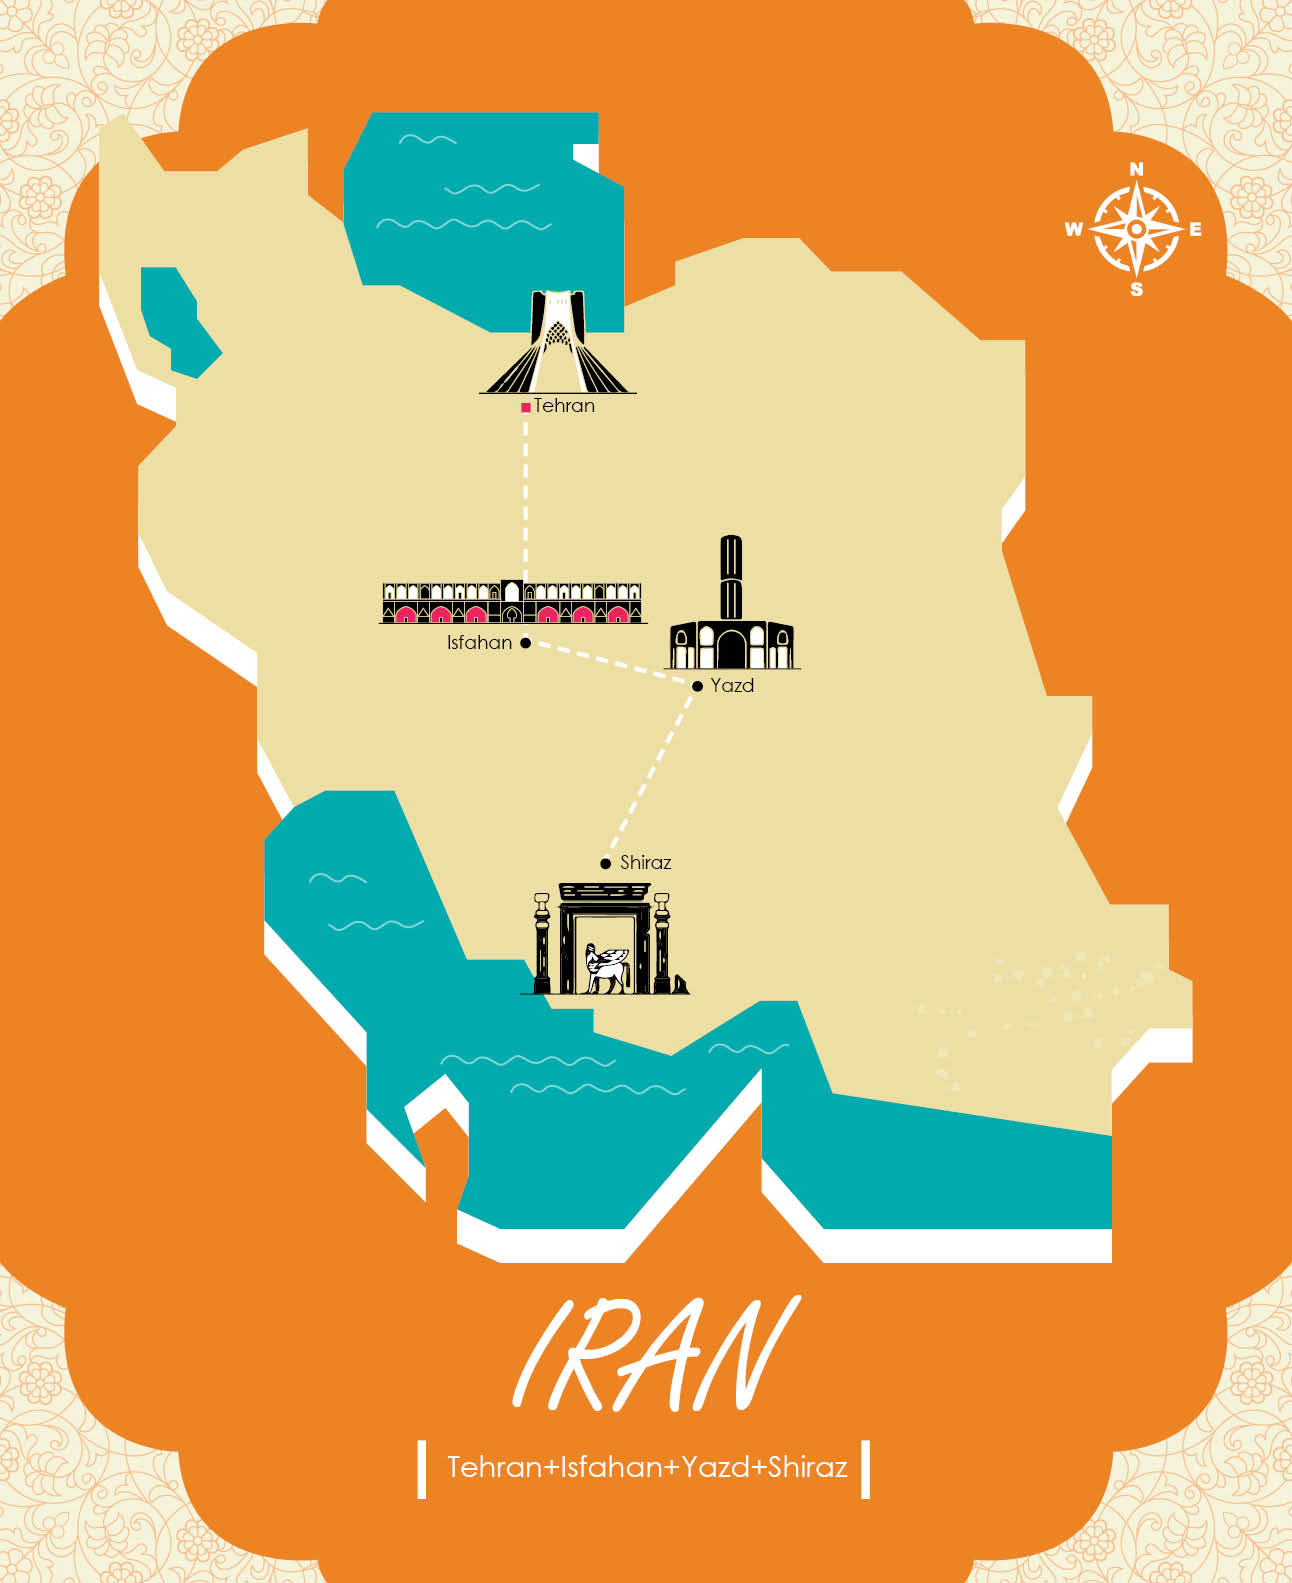 Iran classic tour: Tehran, Isfahan, Yazd, Shiraz (10 days)